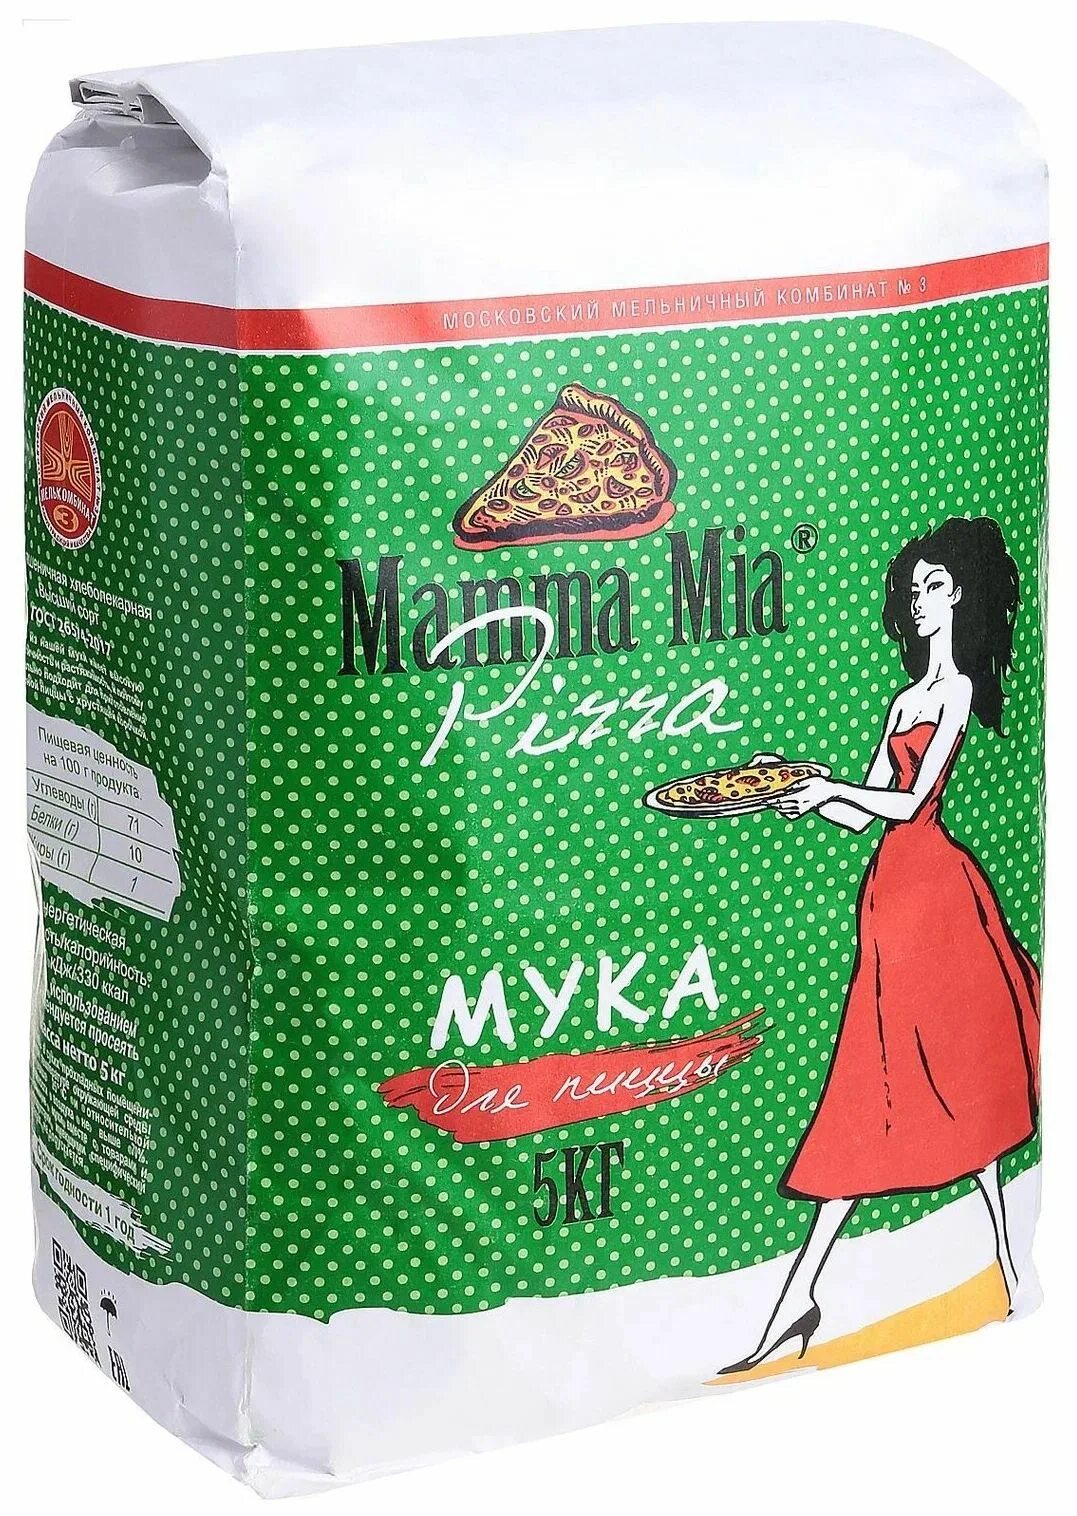 Мука mamma Mia pizza. Мука мама Миа 10 кг. Мука в/с mamma Mia pizza 10 кг. Mamma Mia мука для пиццы.